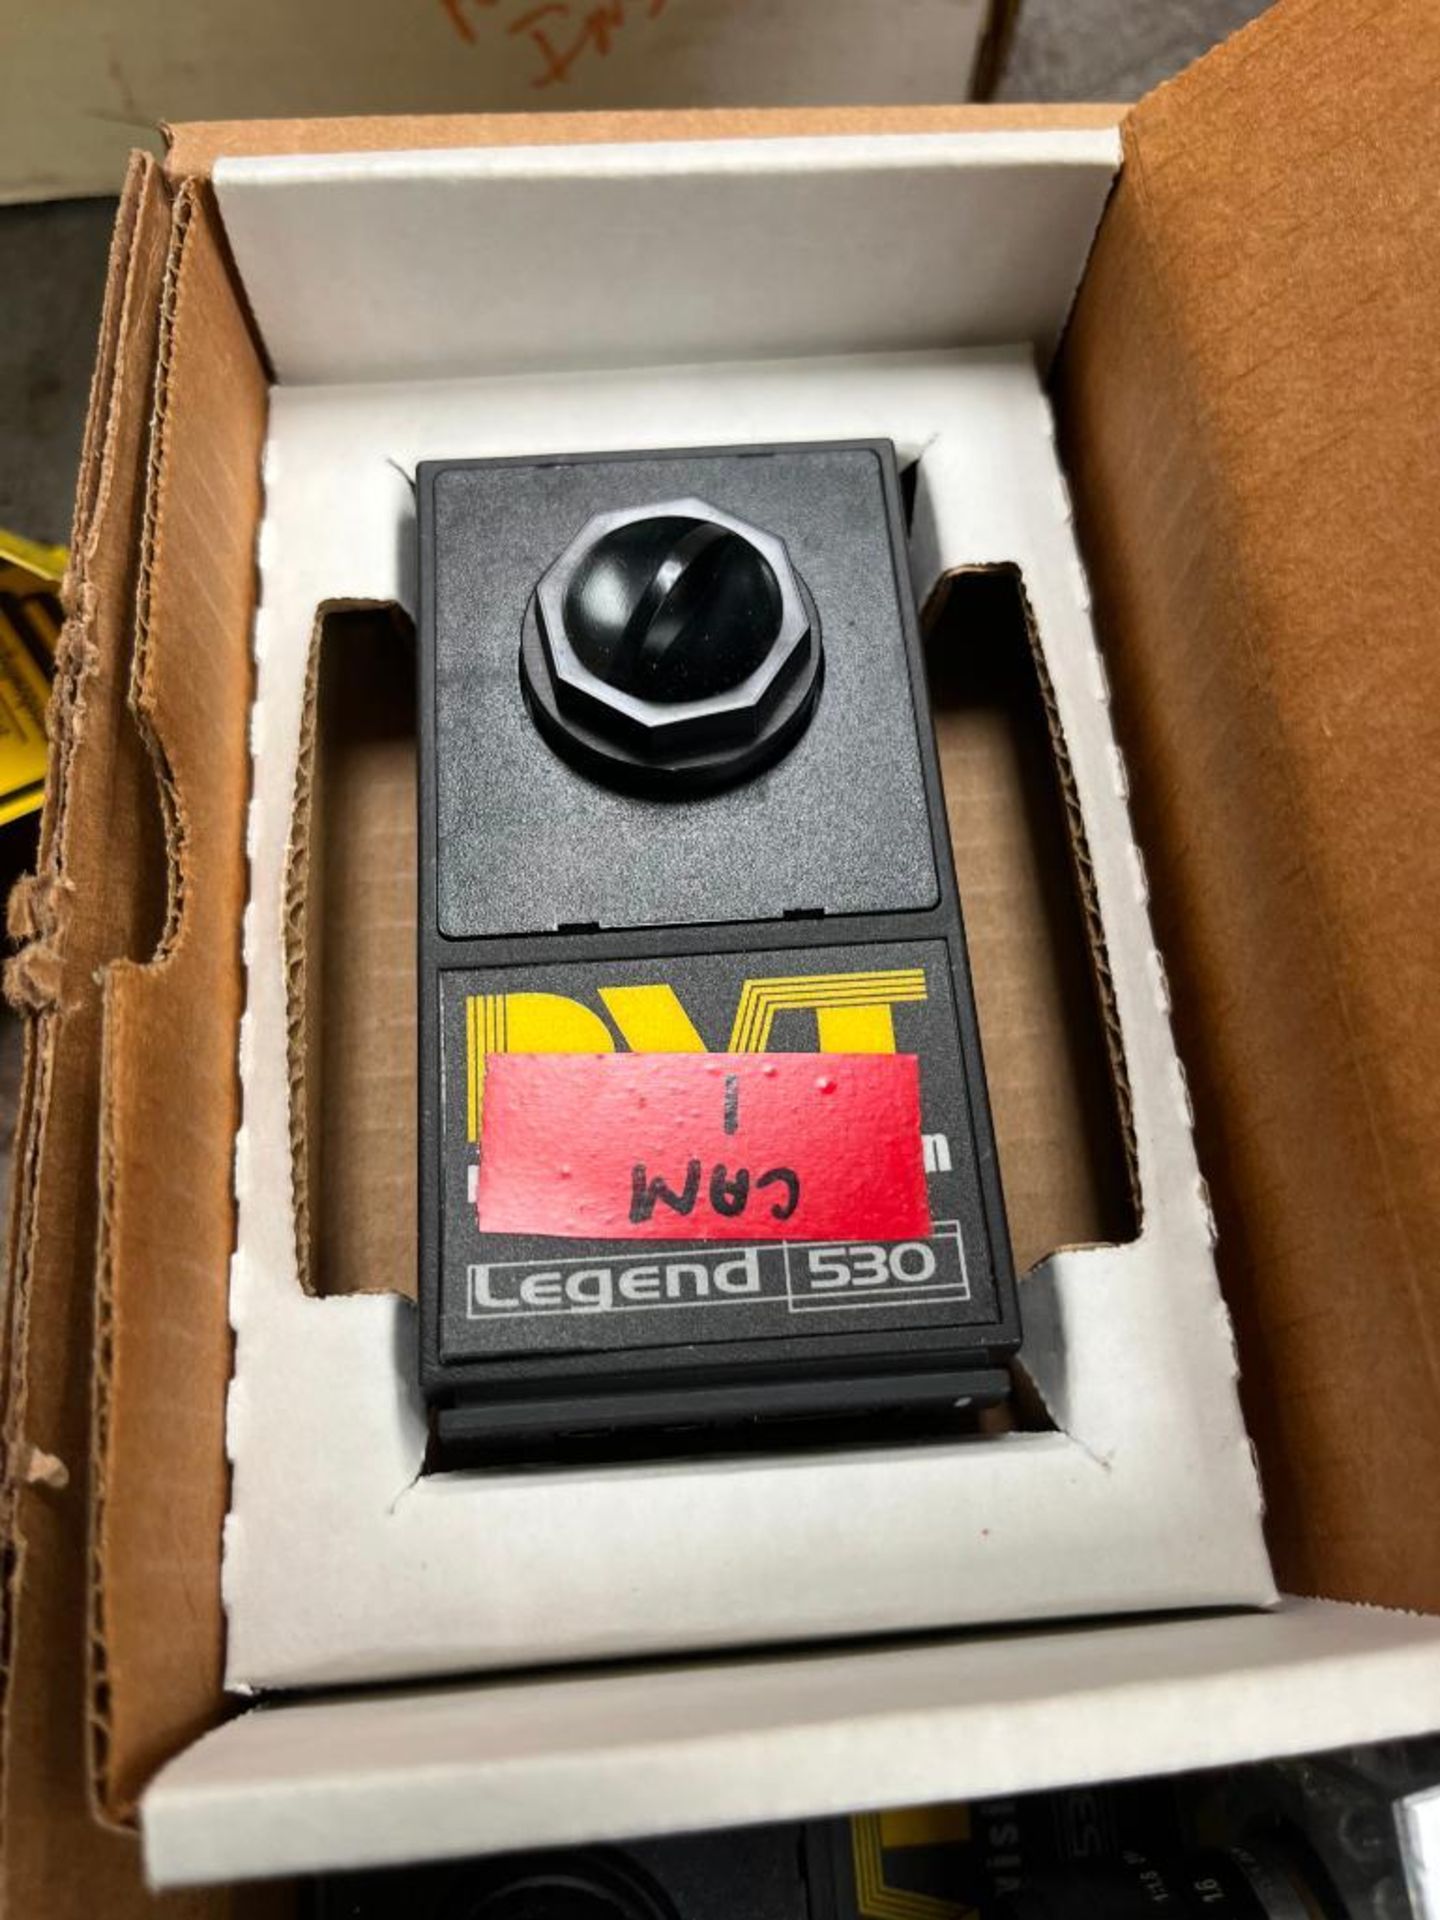 Box of DVT Legend 530 Smart Image Sensors - Image 3 of 5